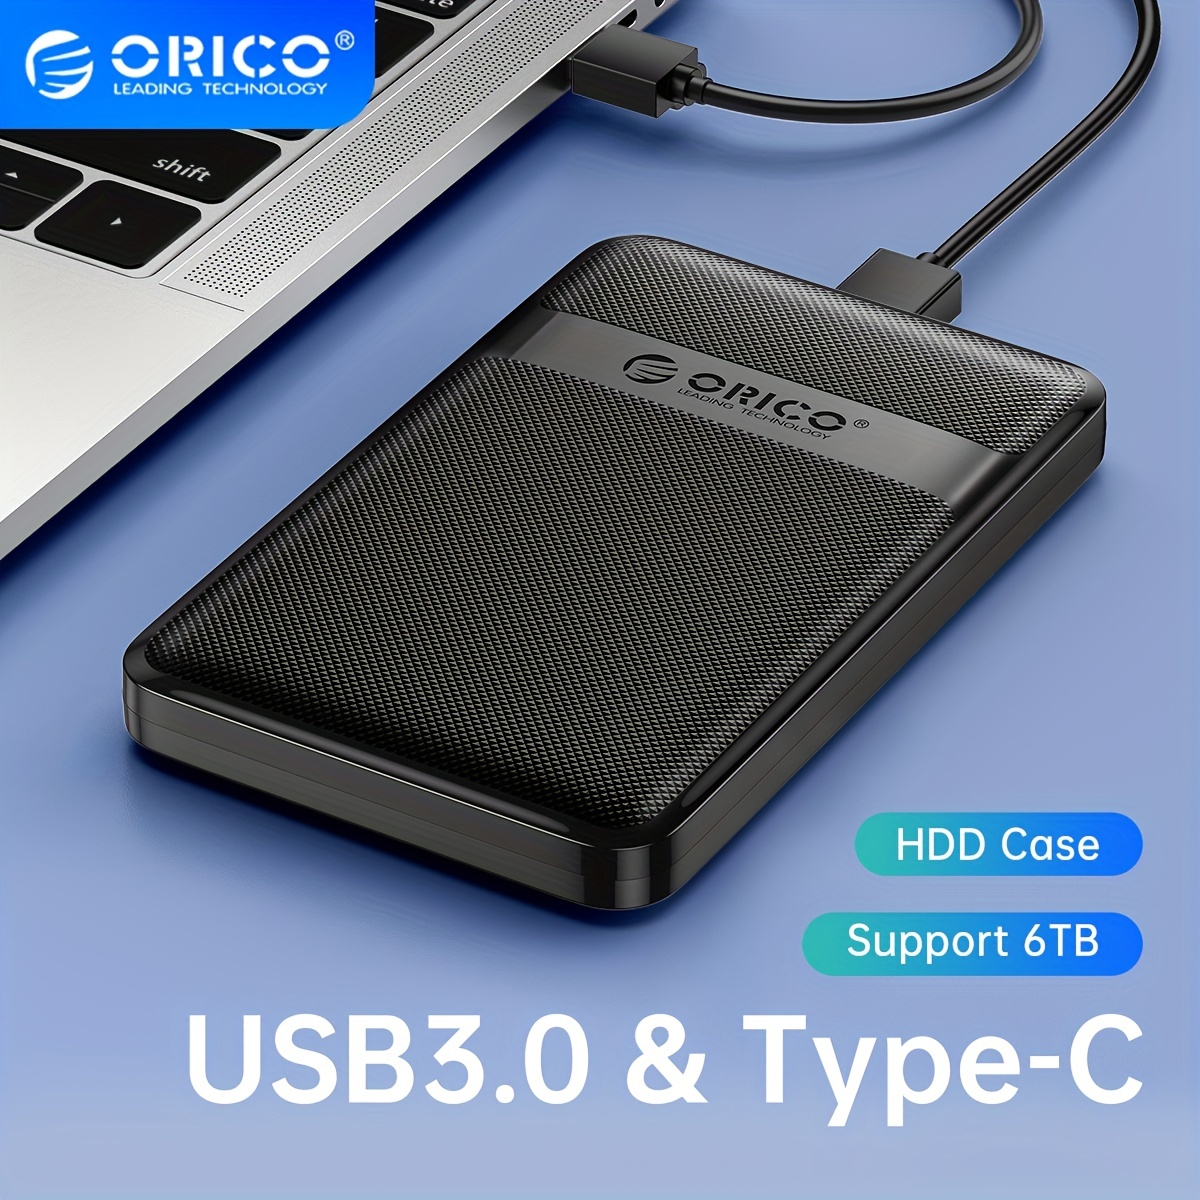 CAJA 2,5 SATA USB-C 3.1 Externa para Disco Duro Negra